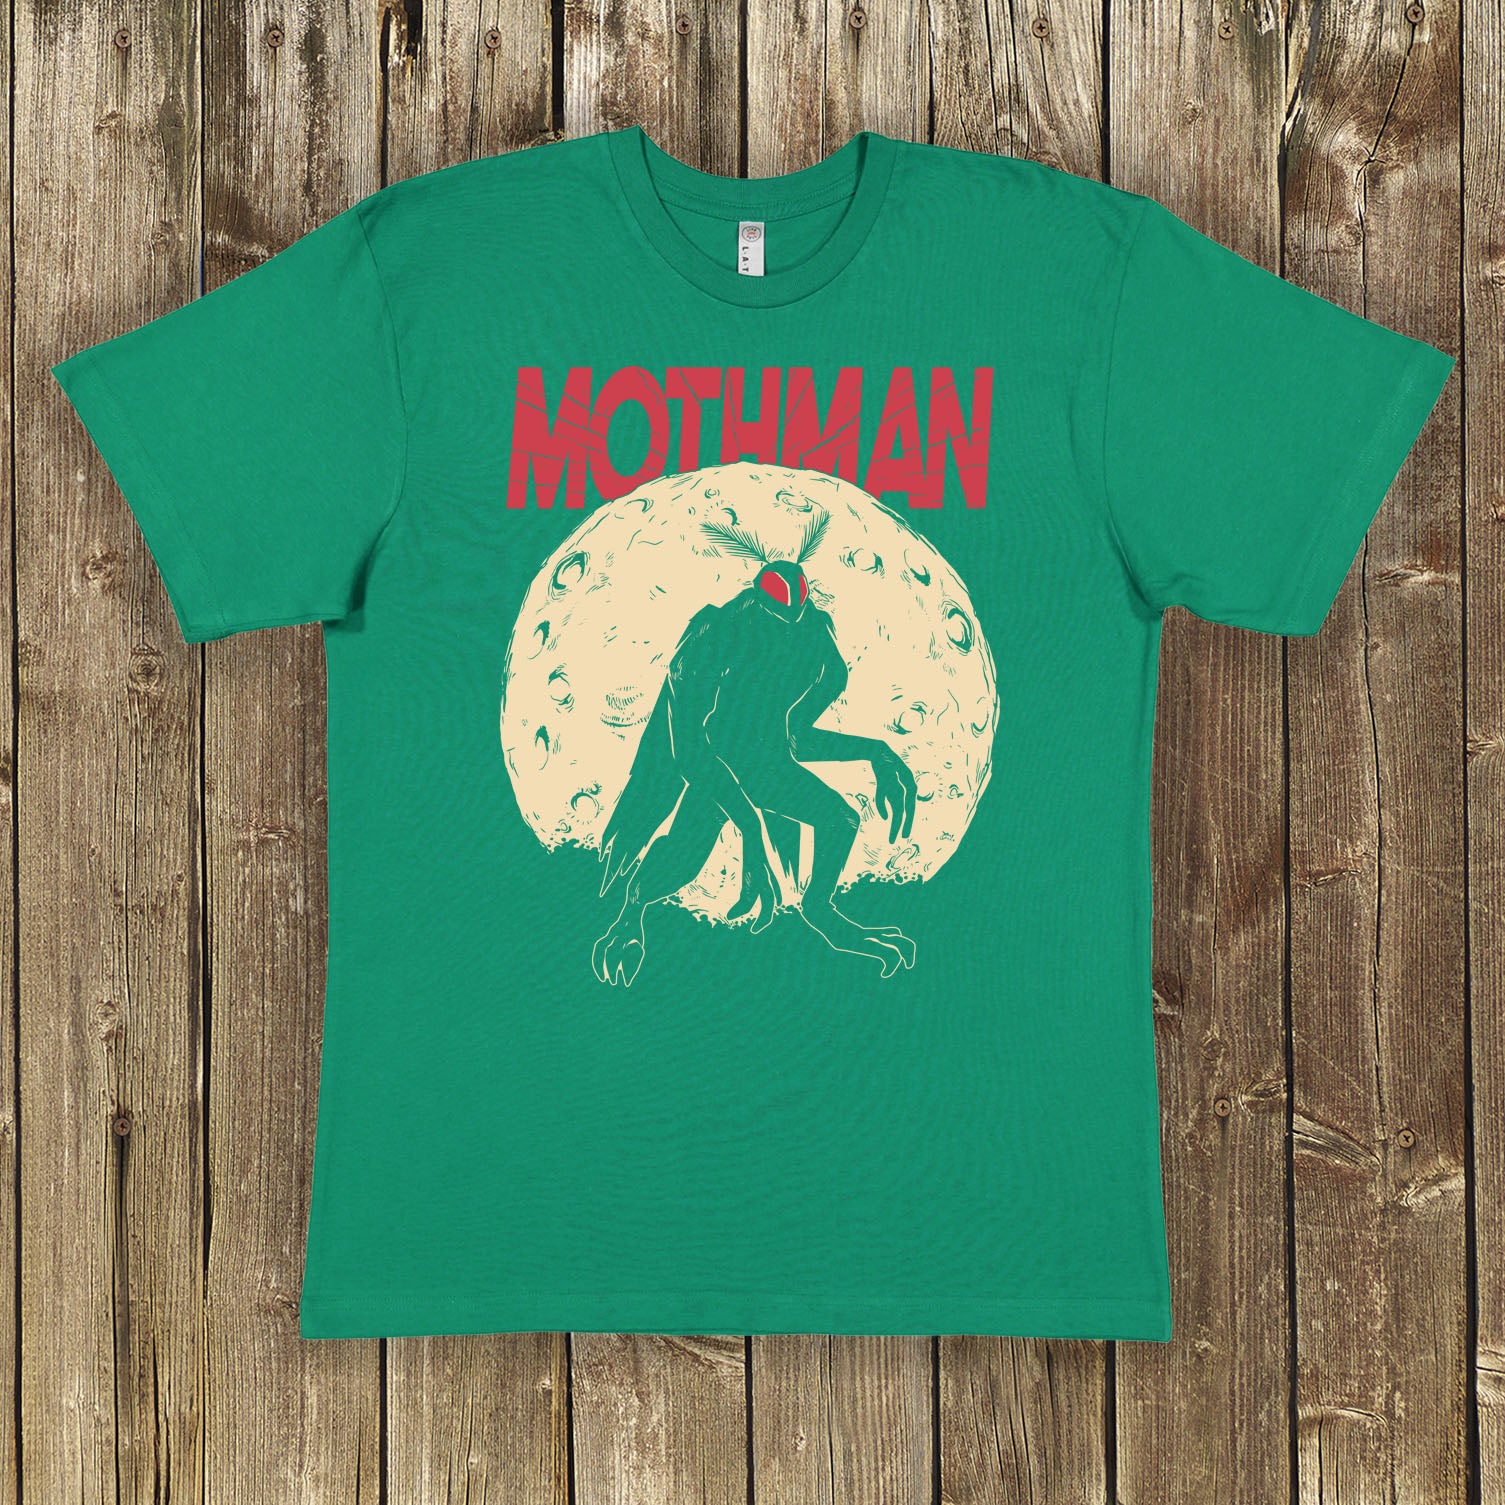 Mothman Shirt